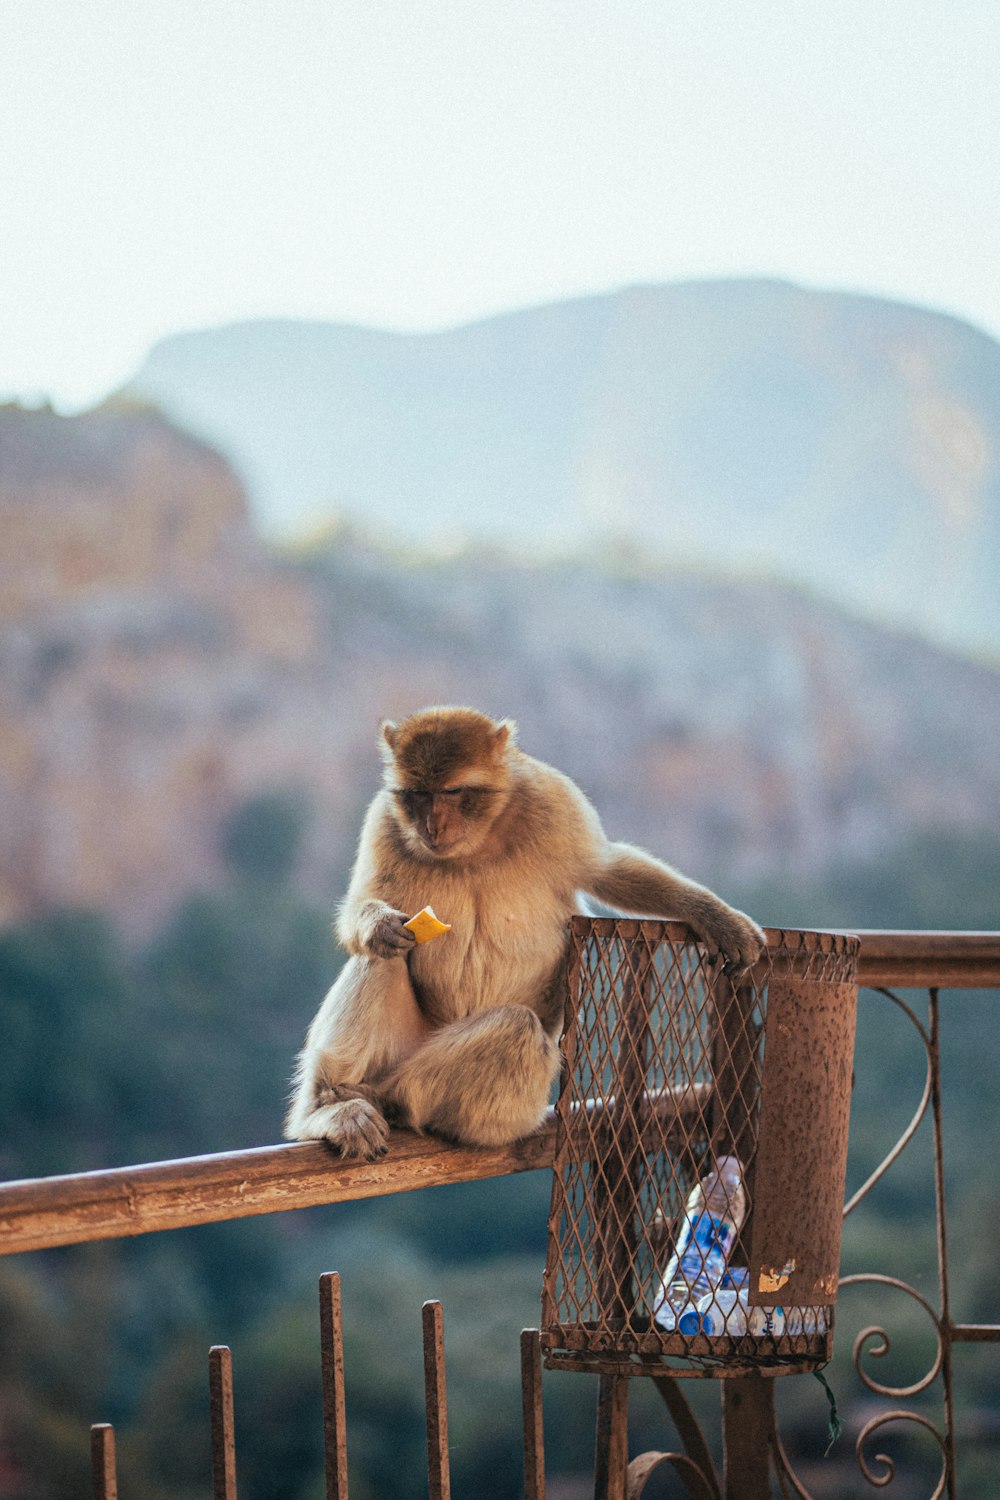 a monkey sitting on a fence eating something